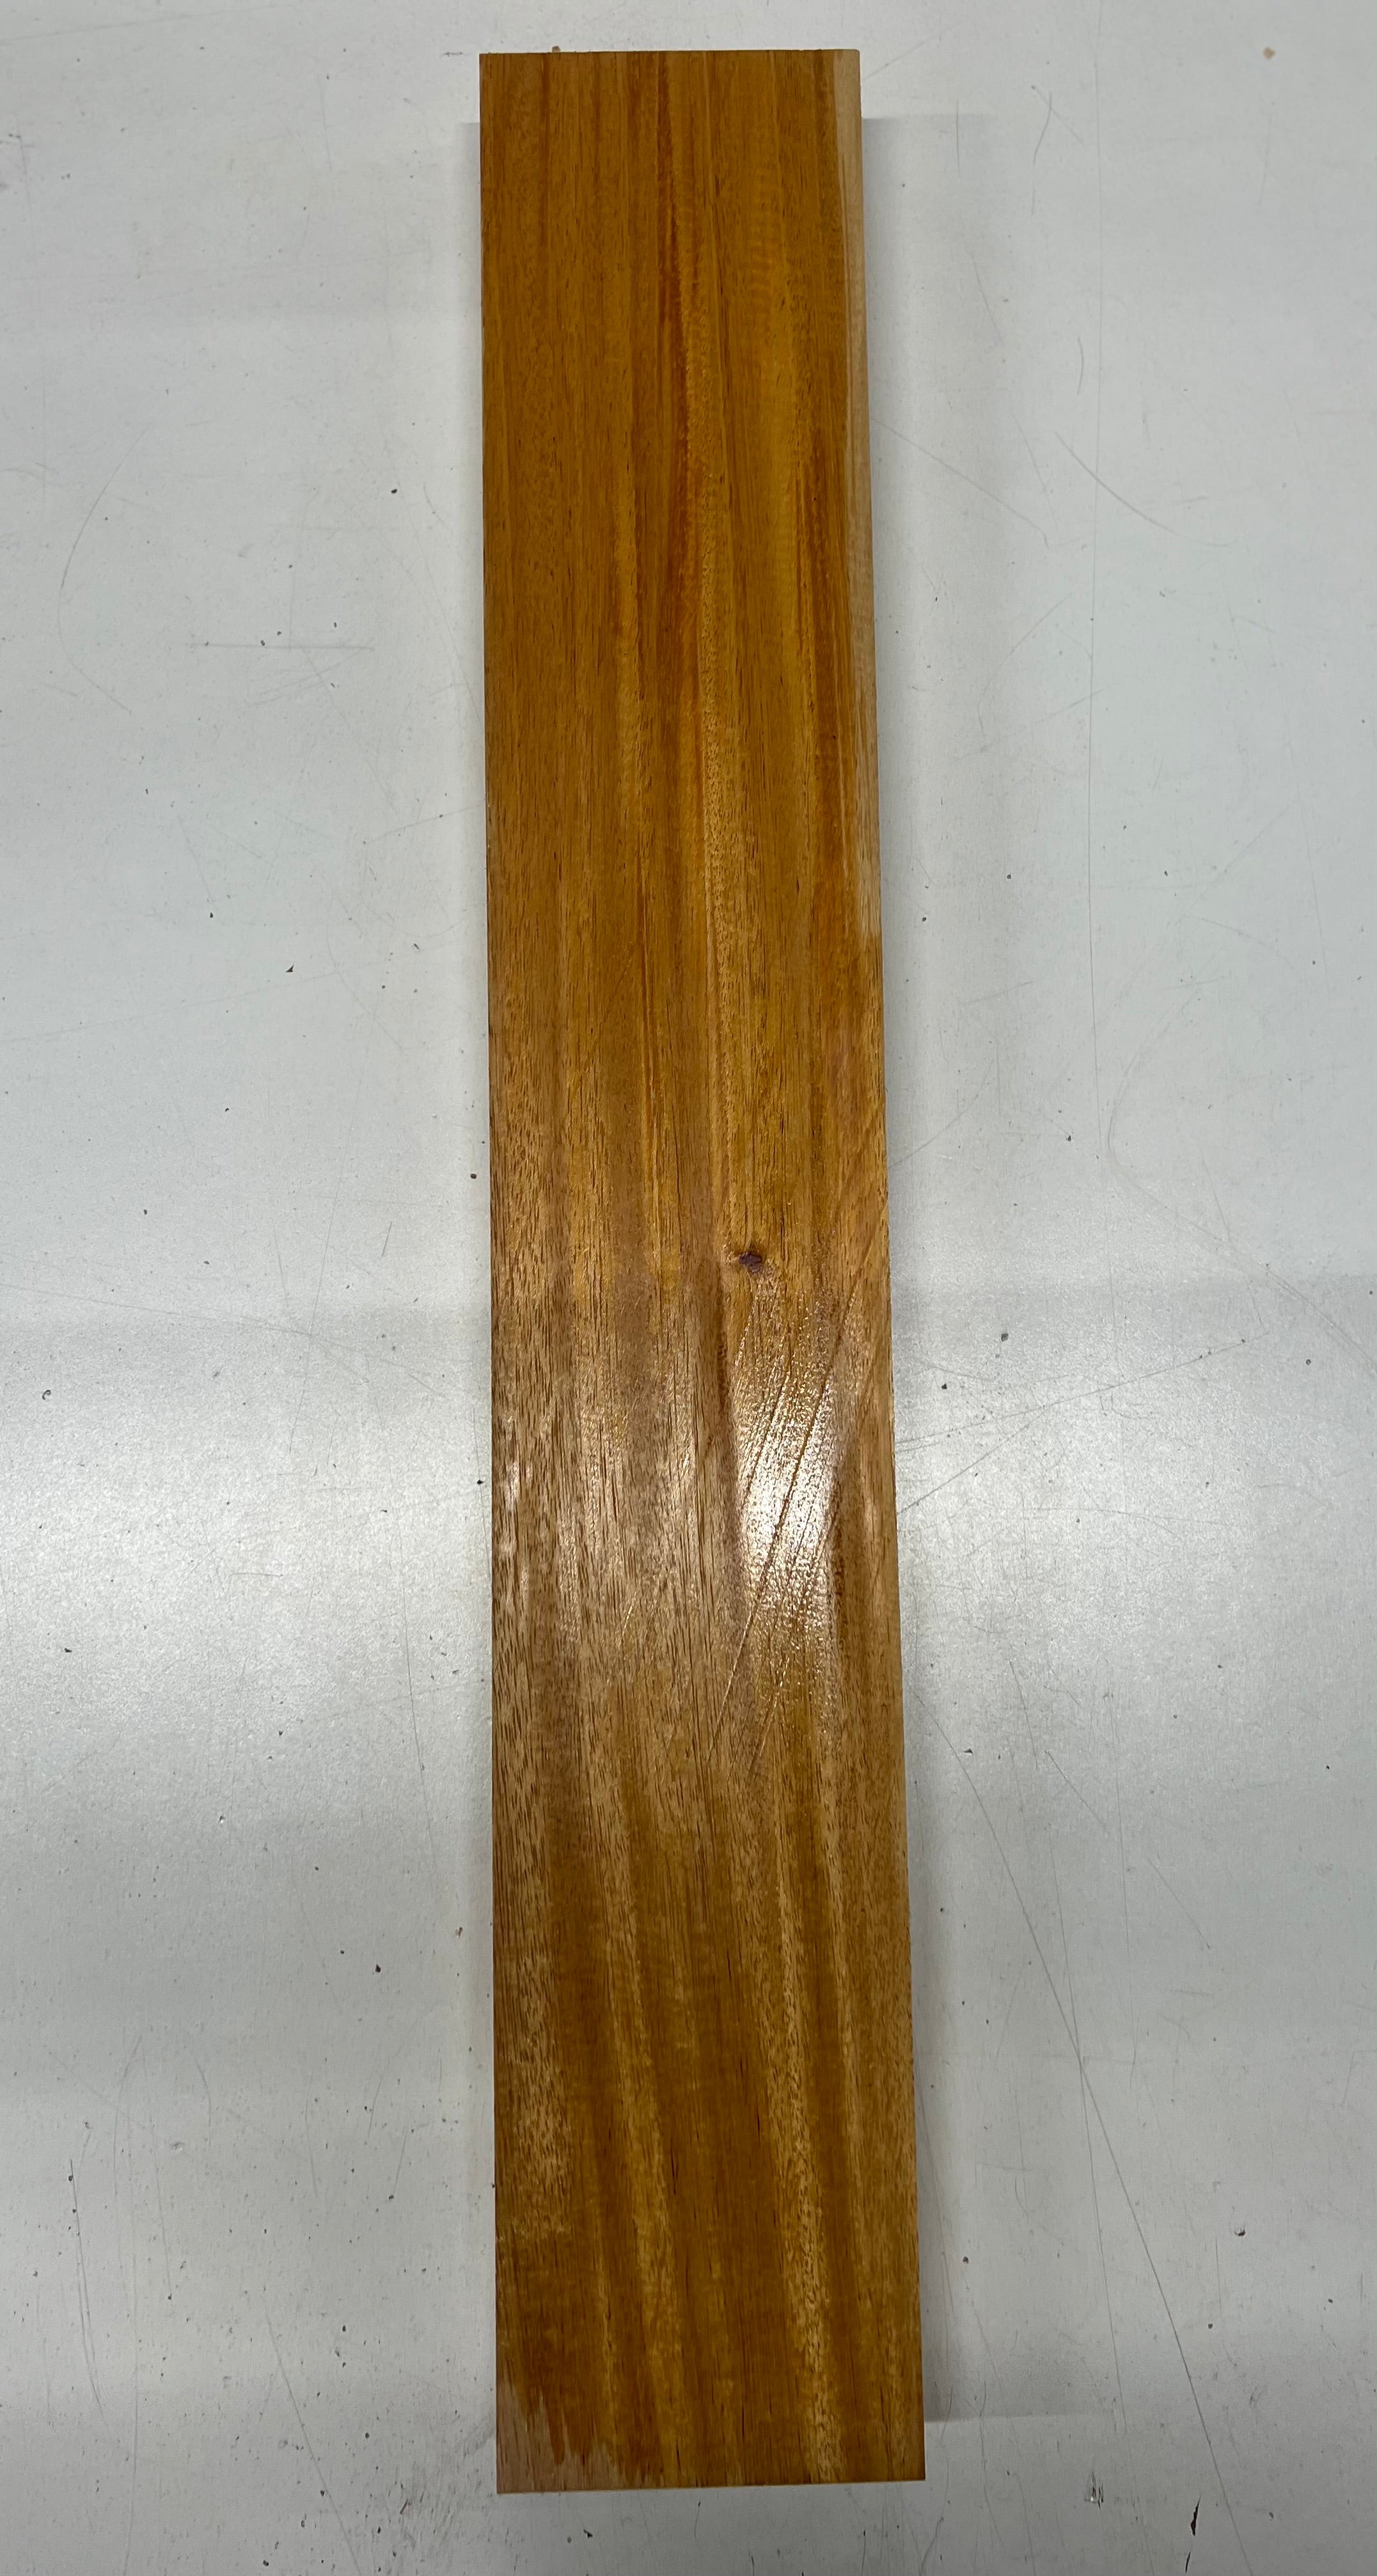 Fijian mahogany Lumber Board Wood Blank 24&quot;x 4&quot;x 1-1/4&quot; 